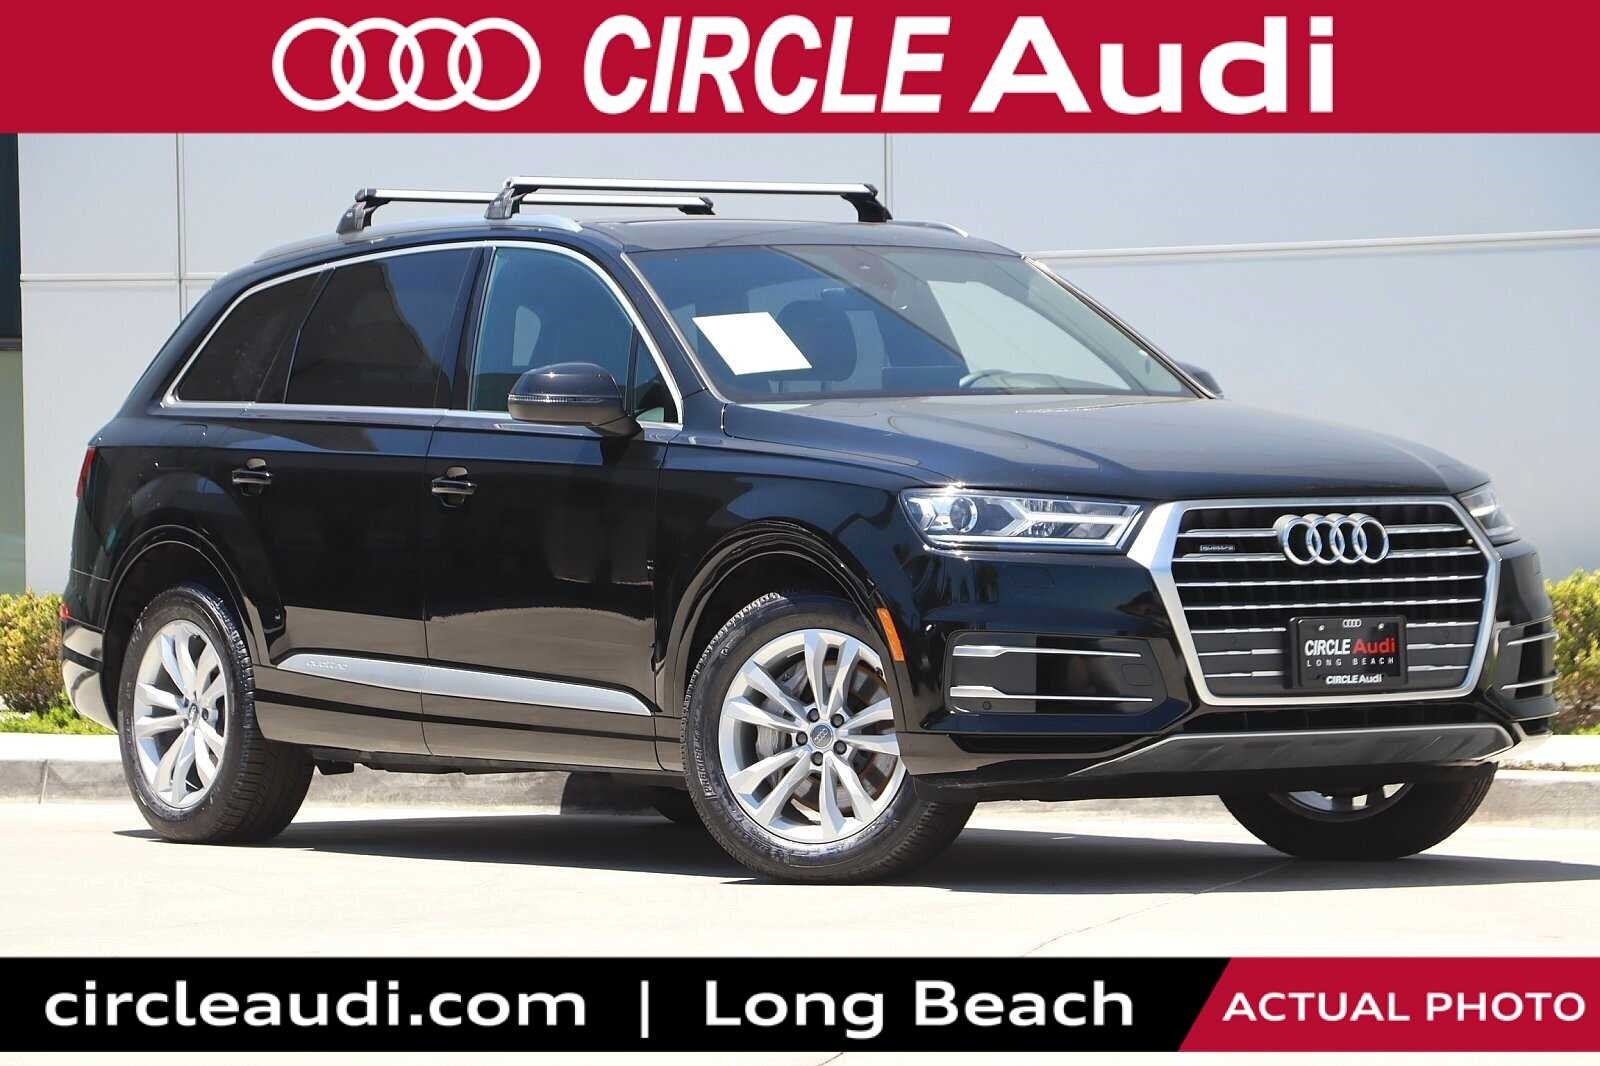 Used Audi Q7 Long Beach Ca